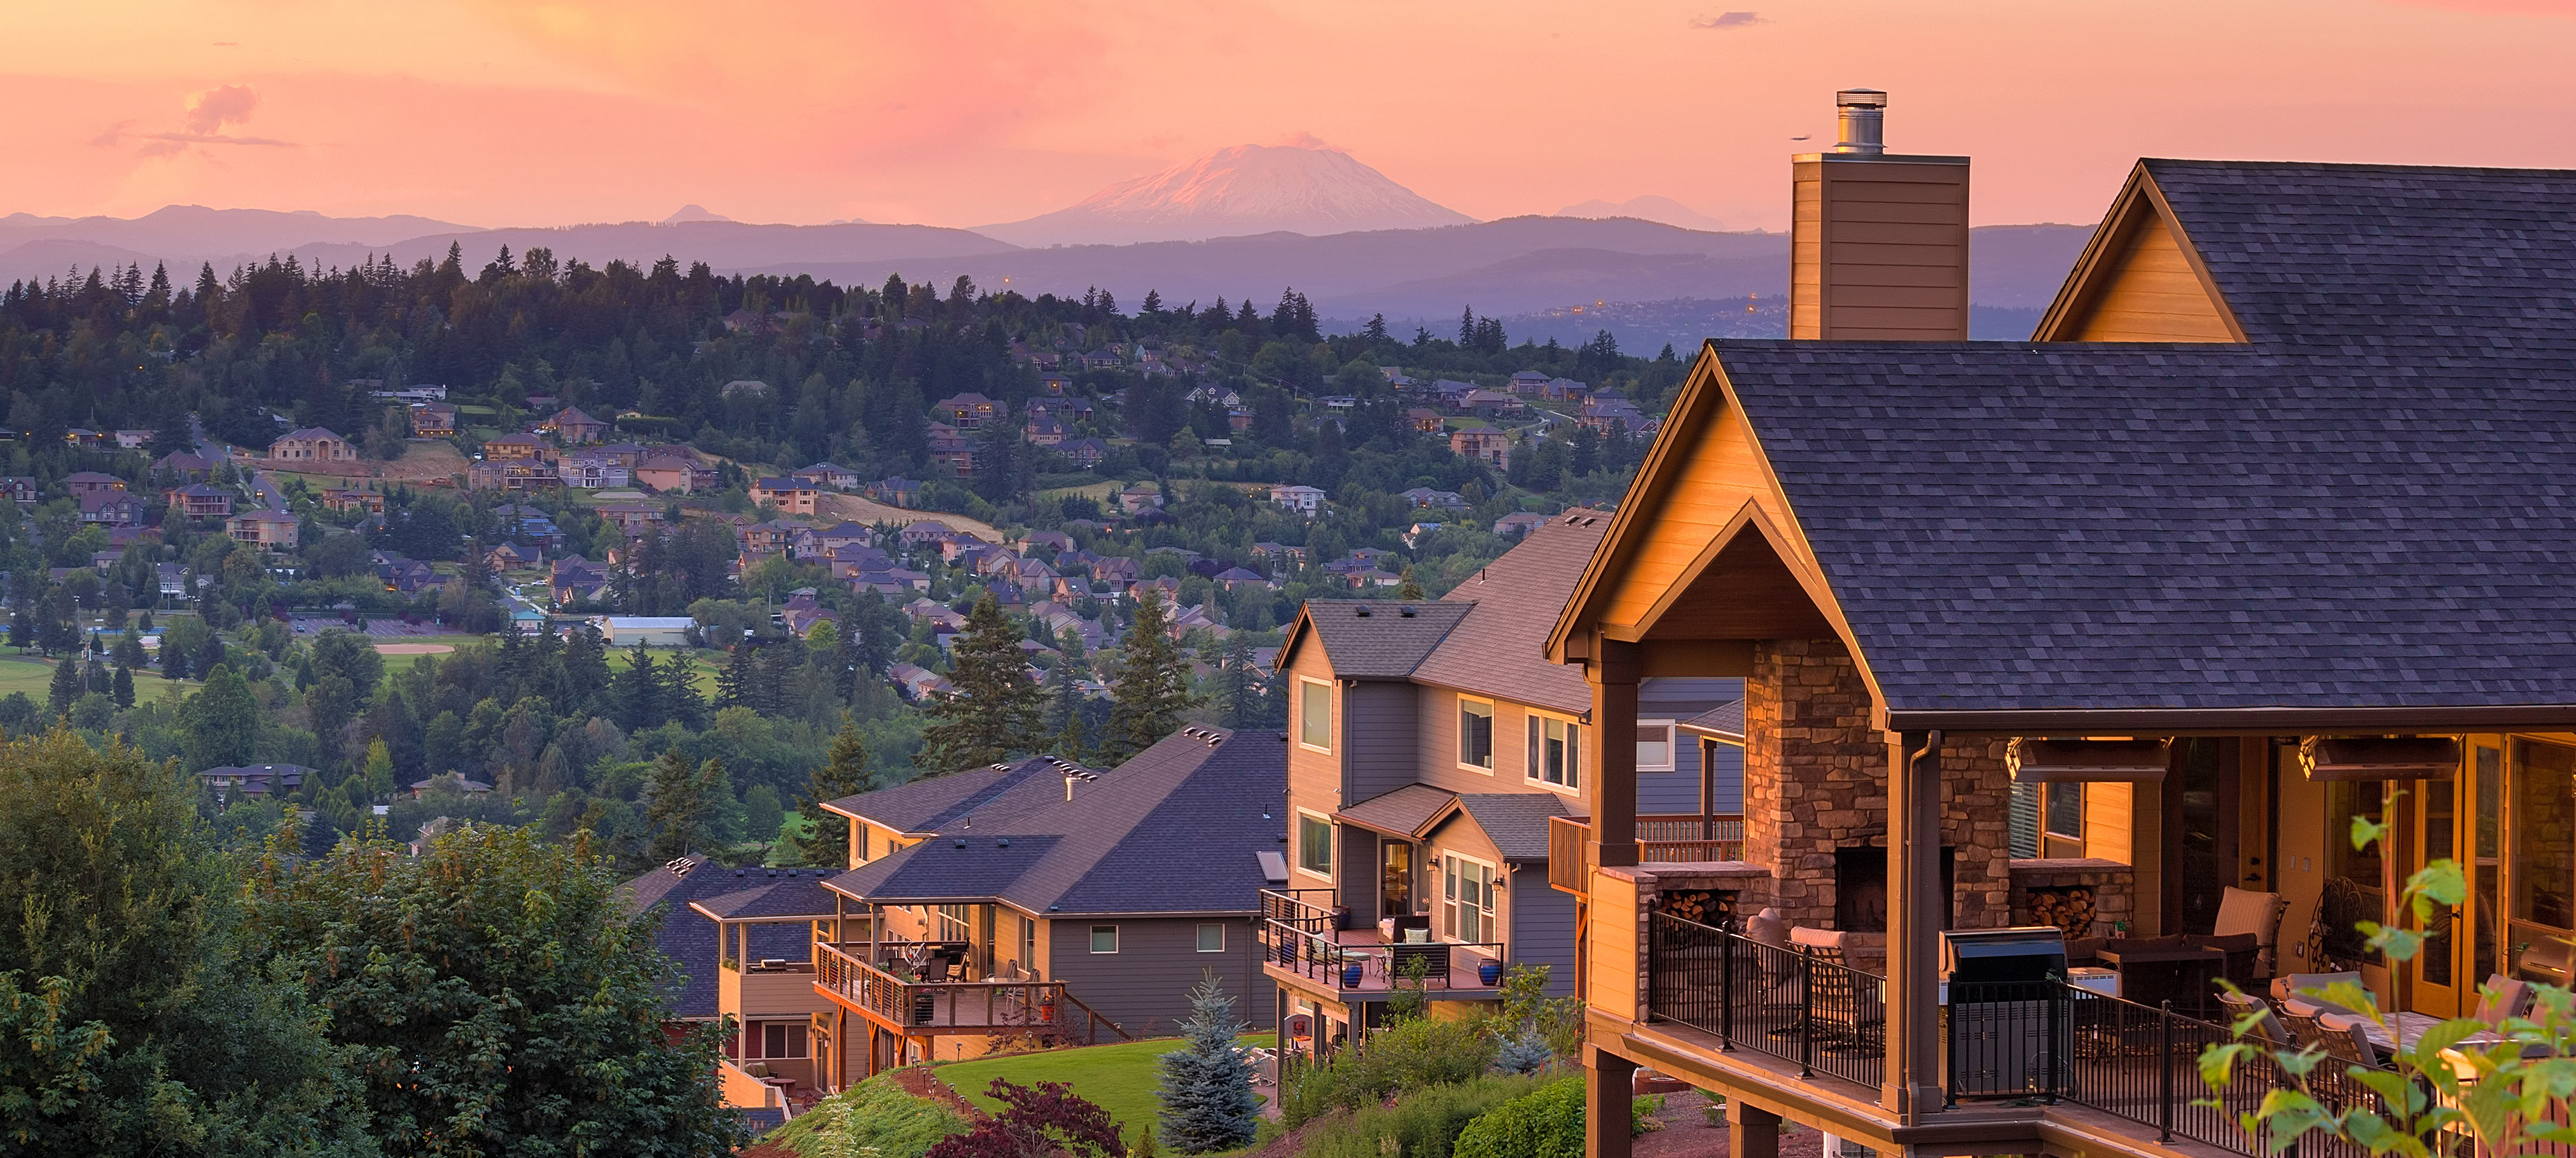 Residential Neighborhood in Oregon